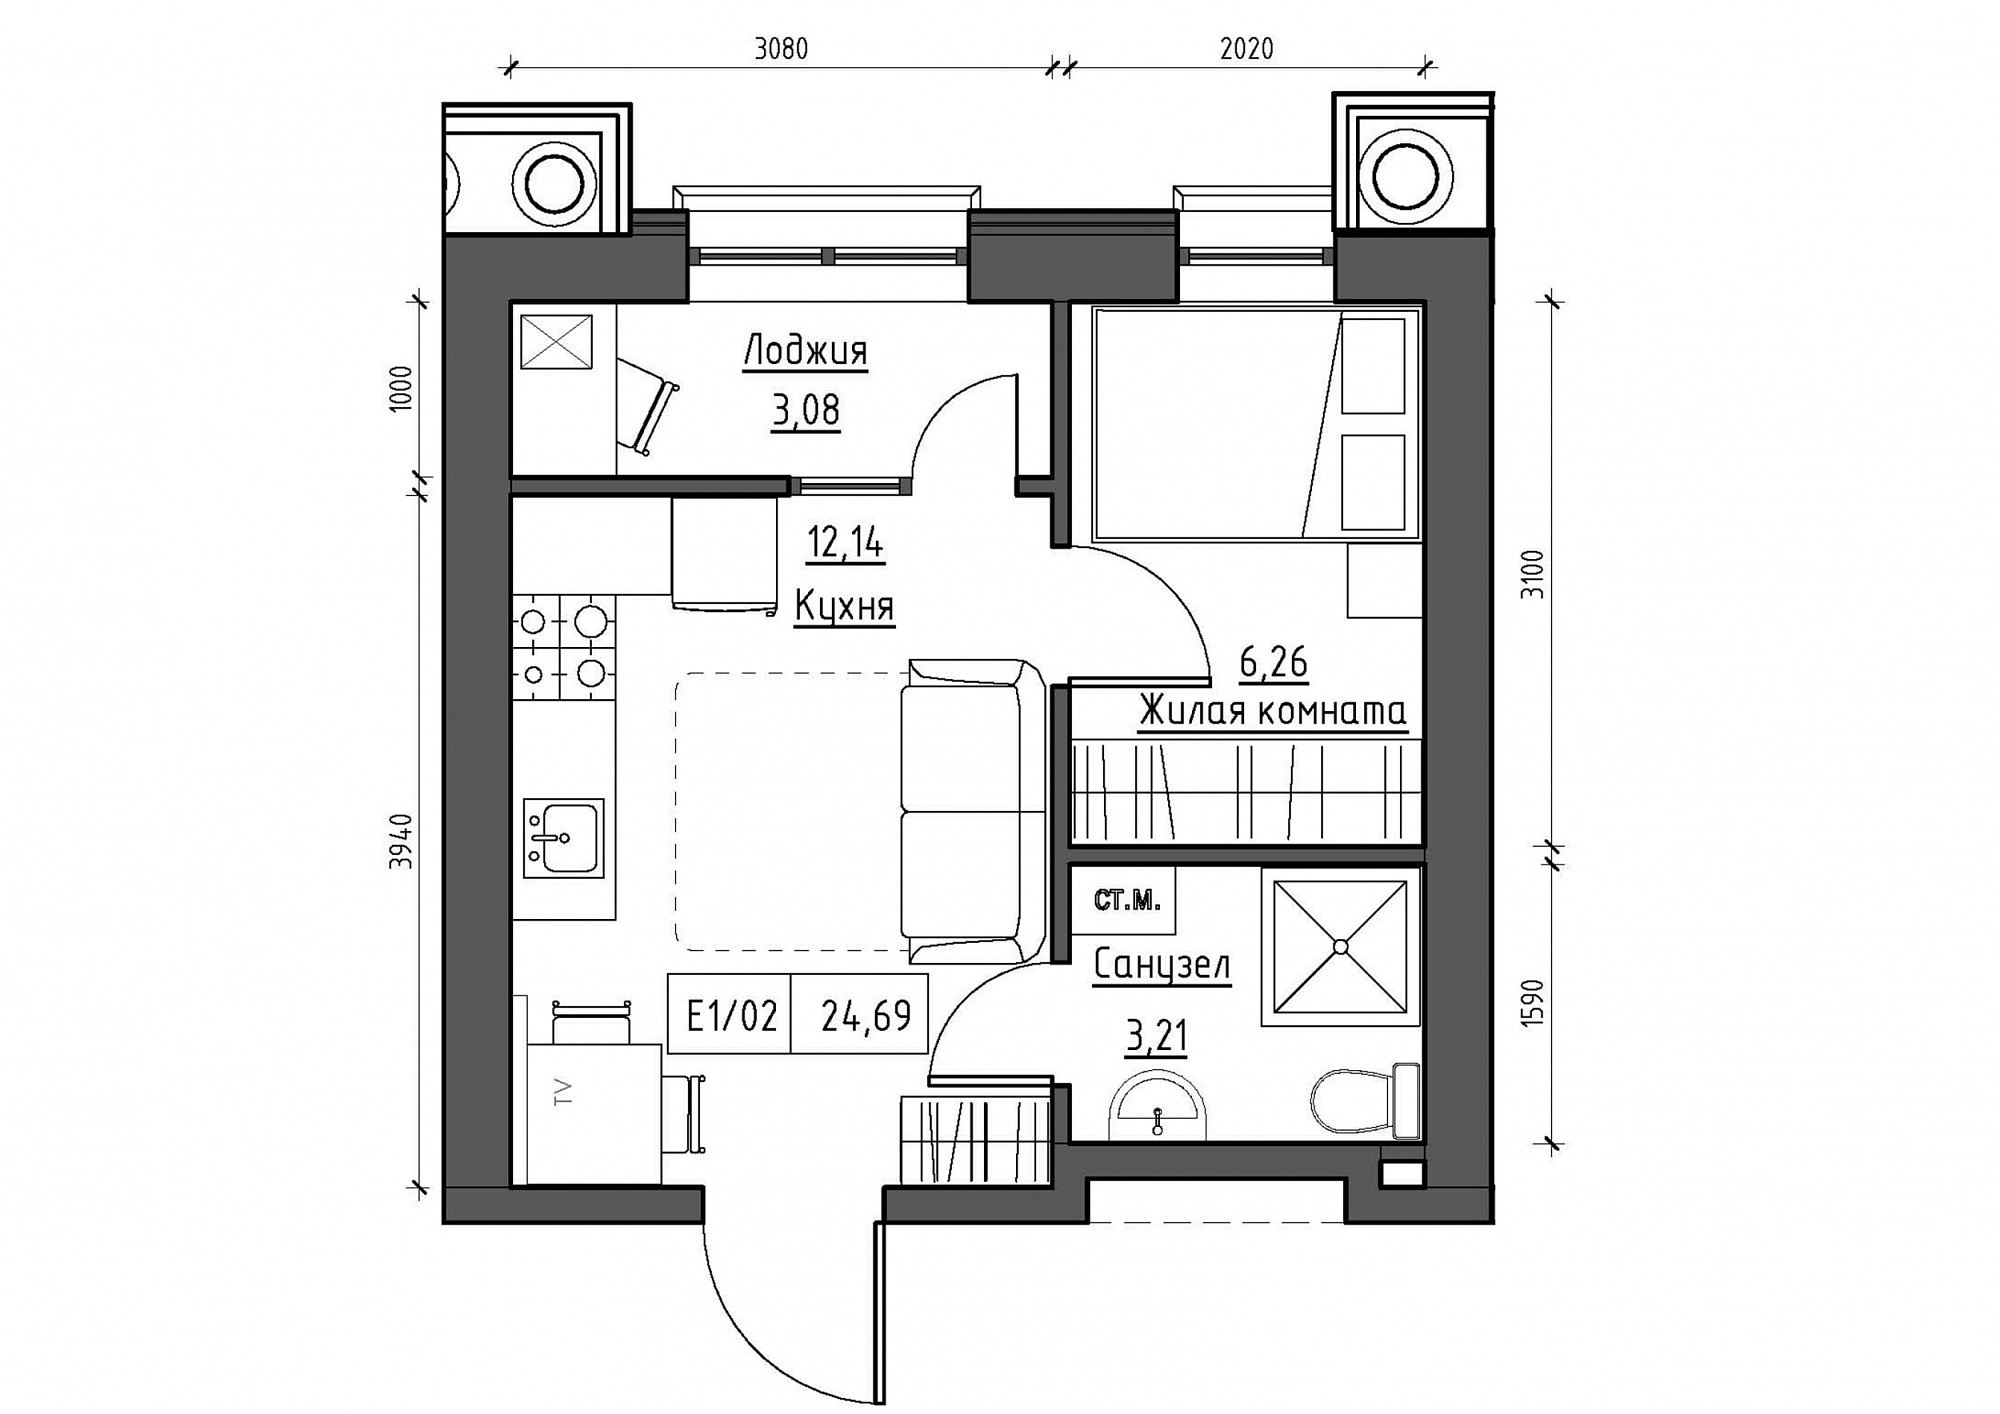 Planning 1-rm flats area 25.11m2, KS-012-04/0002.